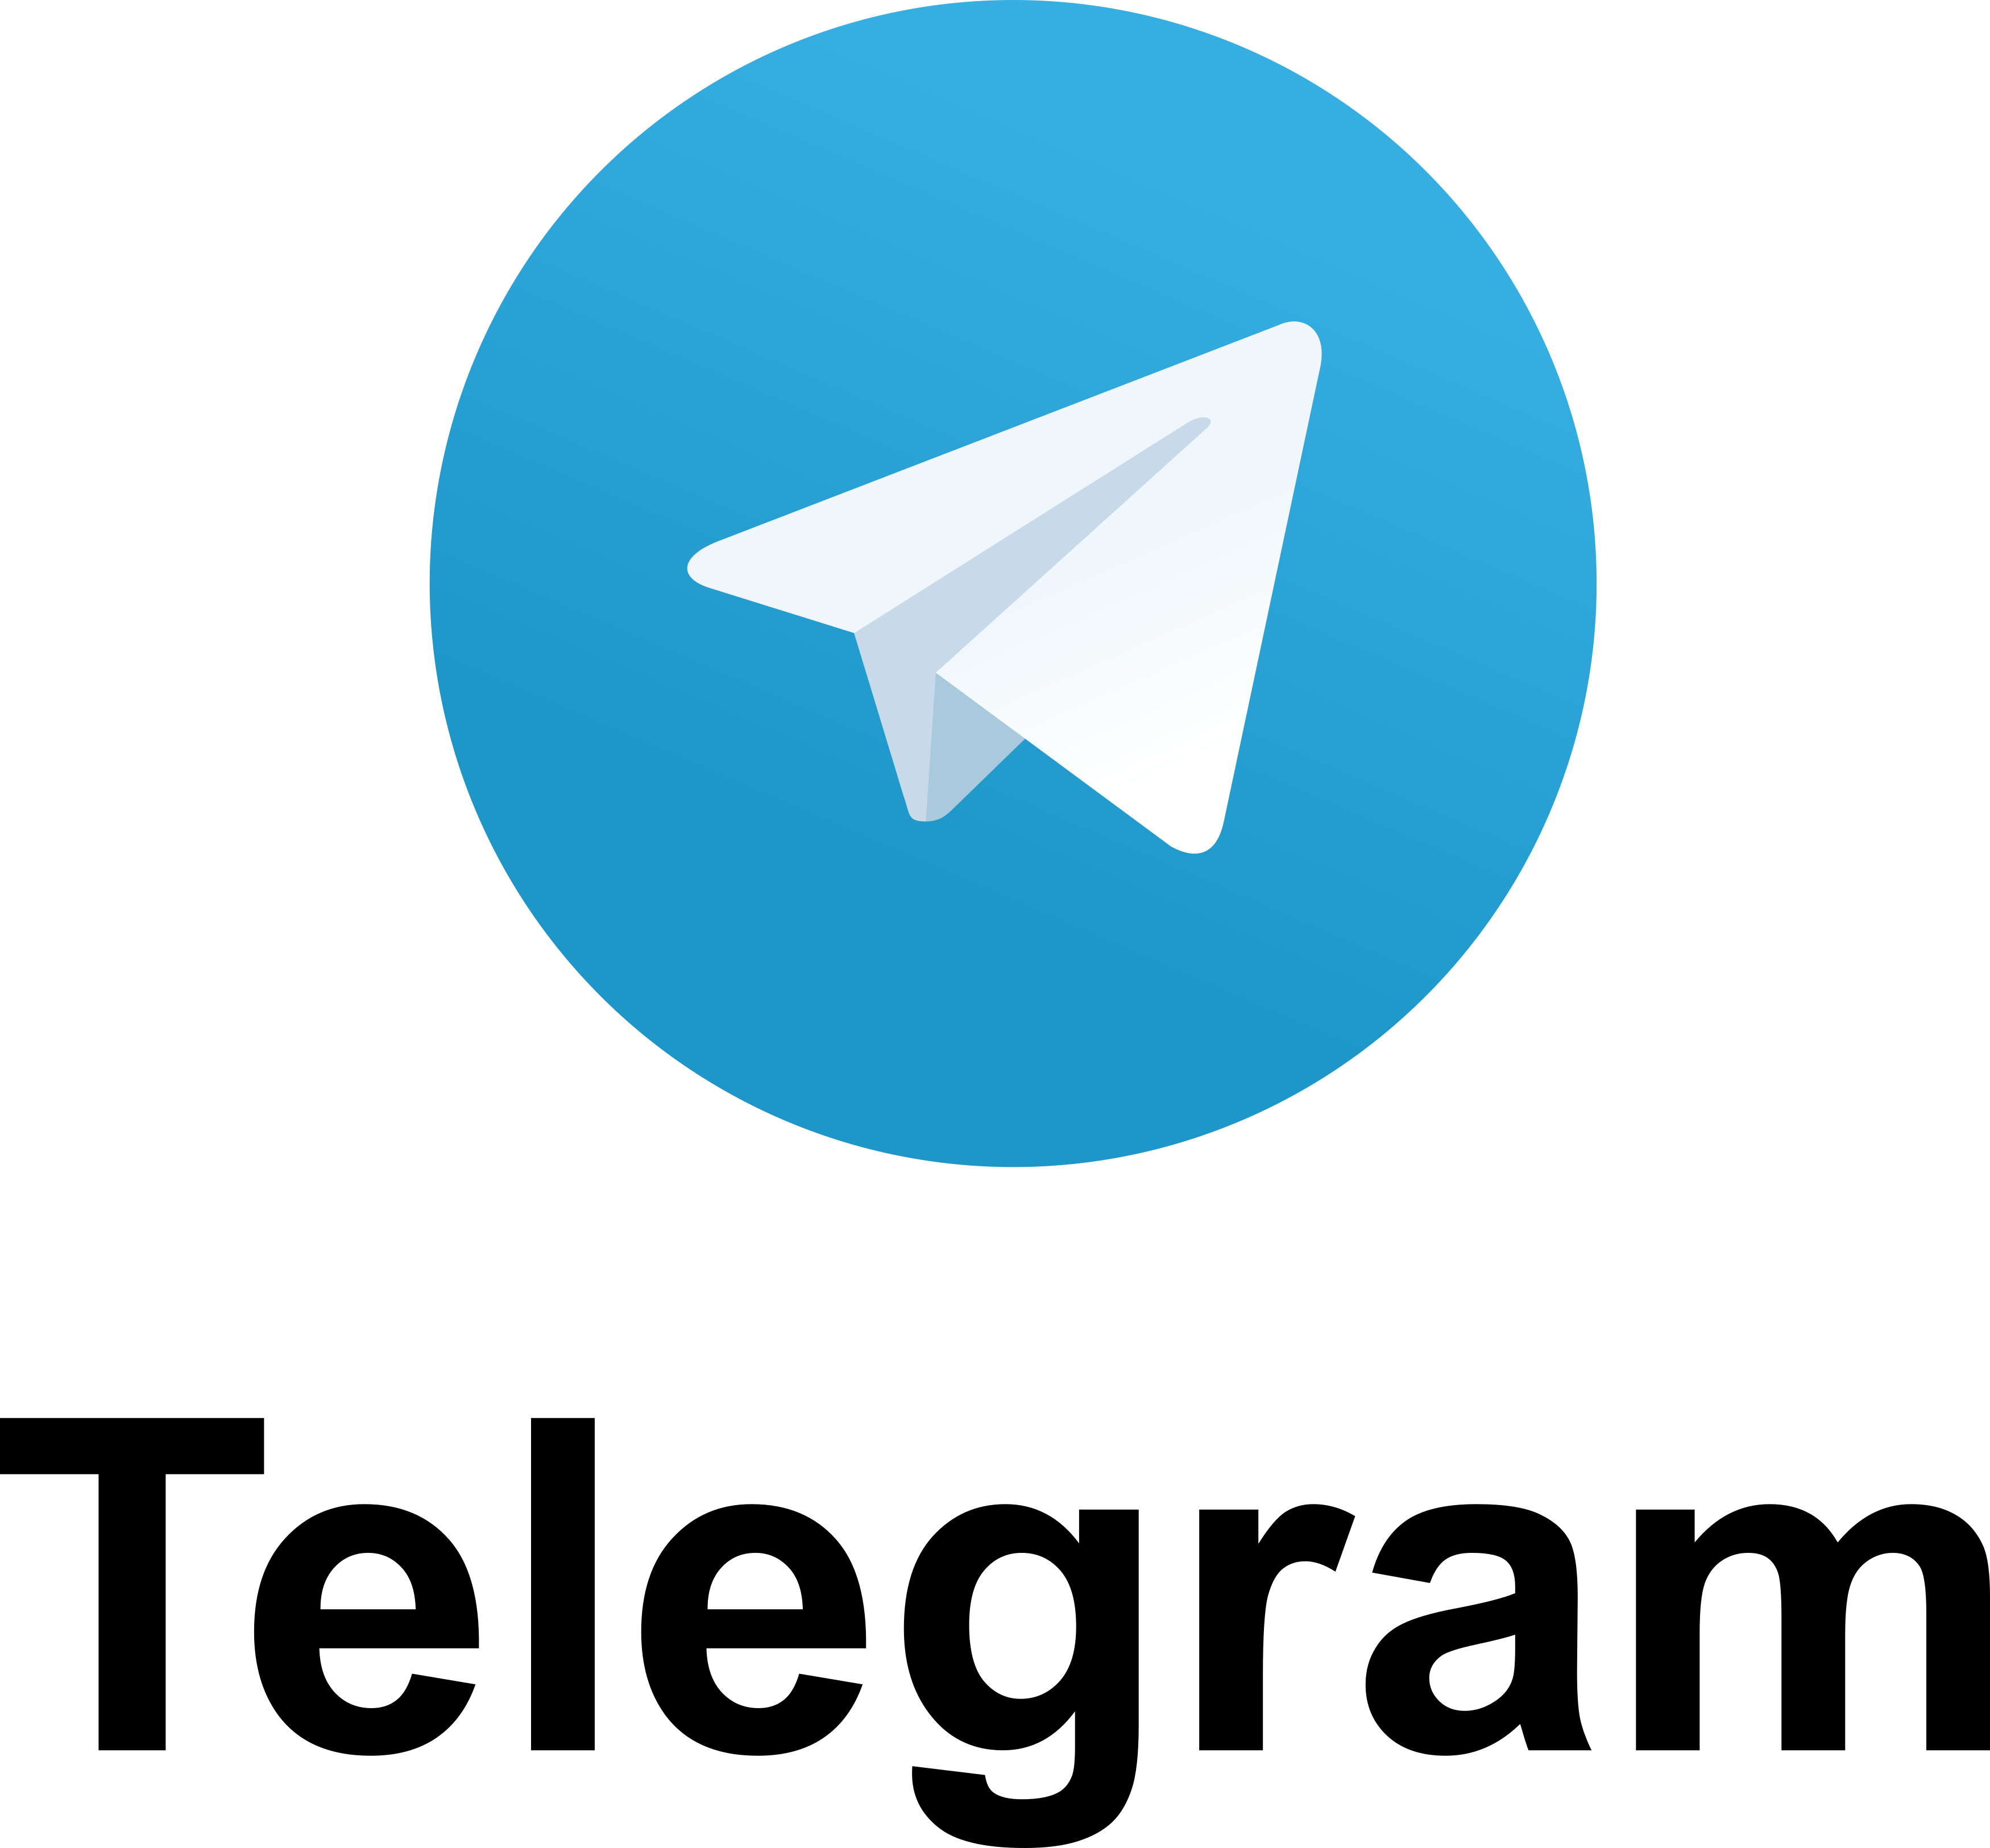 instagram clipart telegram